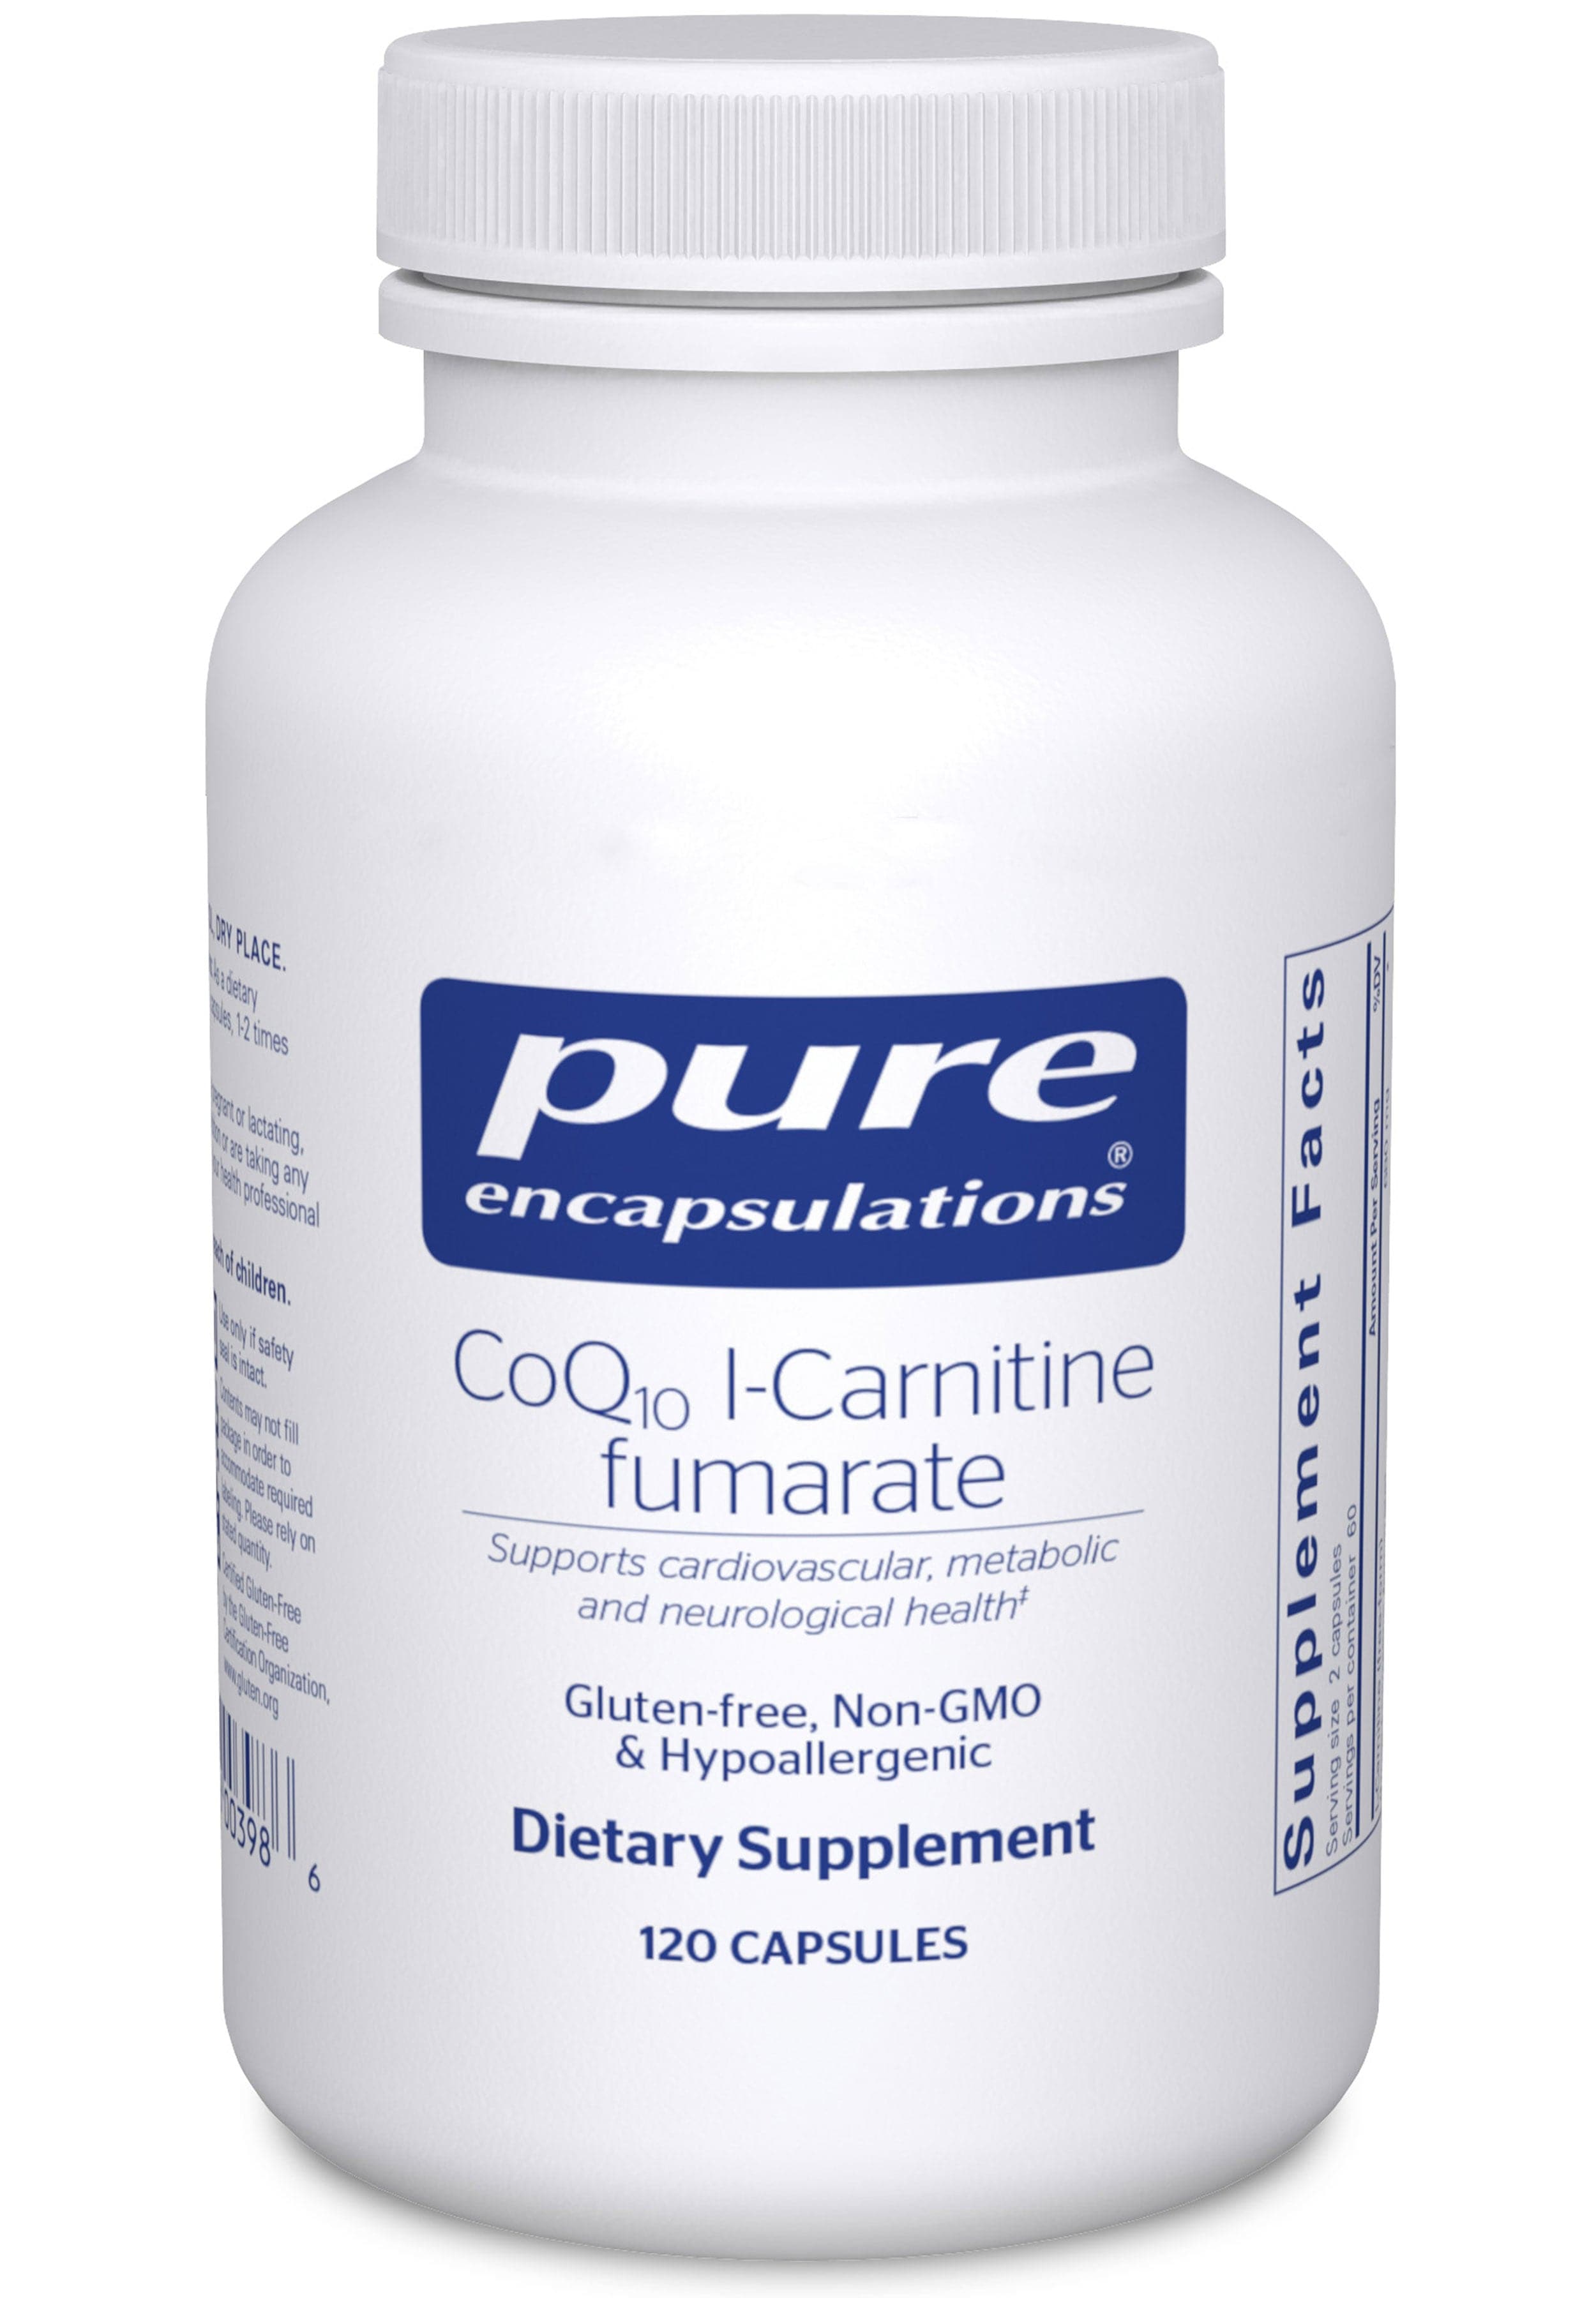 Pure Encapsulations CoQ10 l-Carnitine fumarate